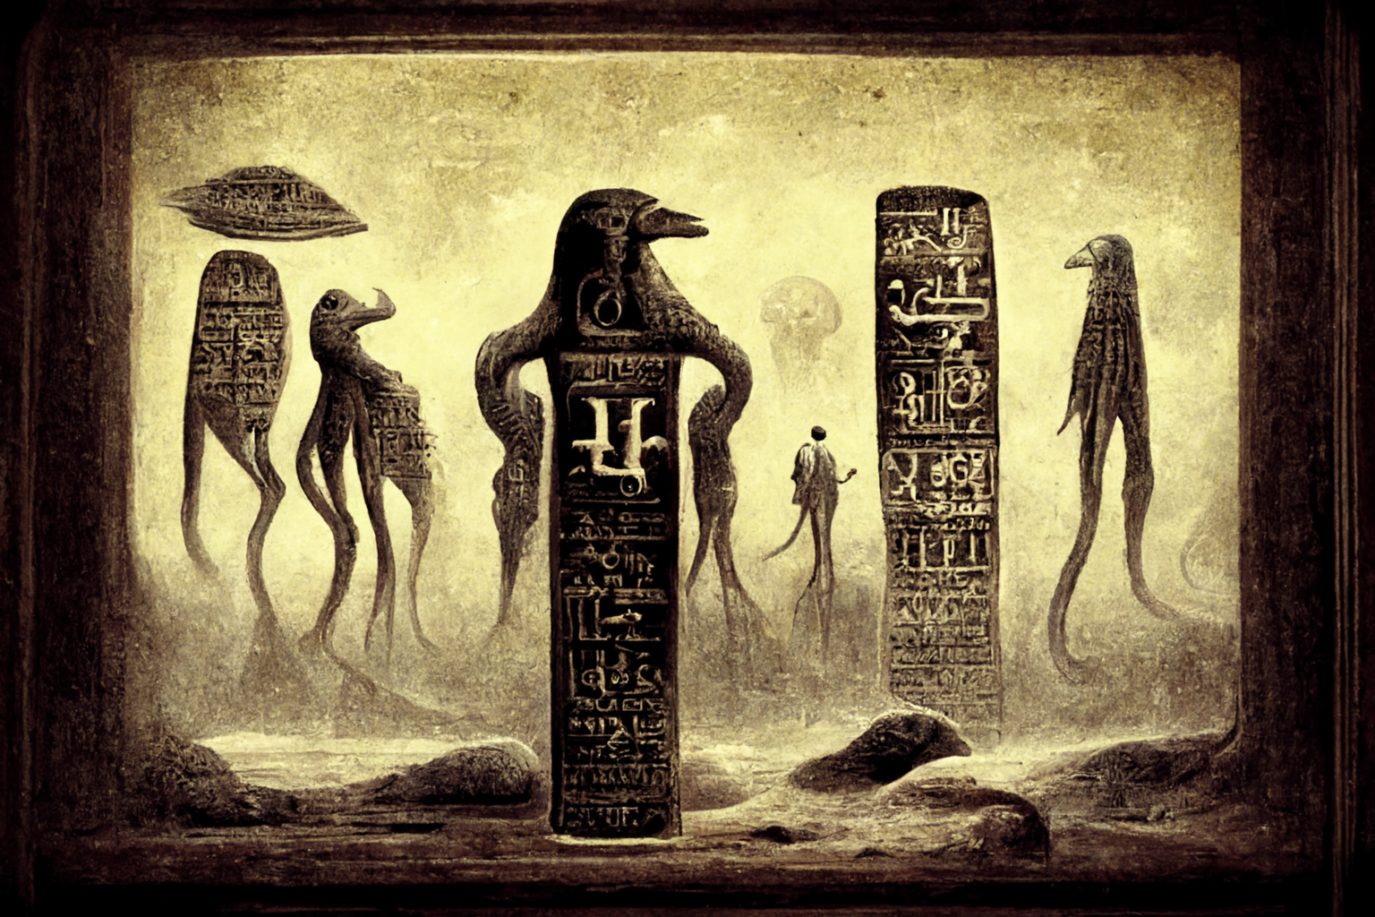 Hieroglyphics from Hermetic teachings